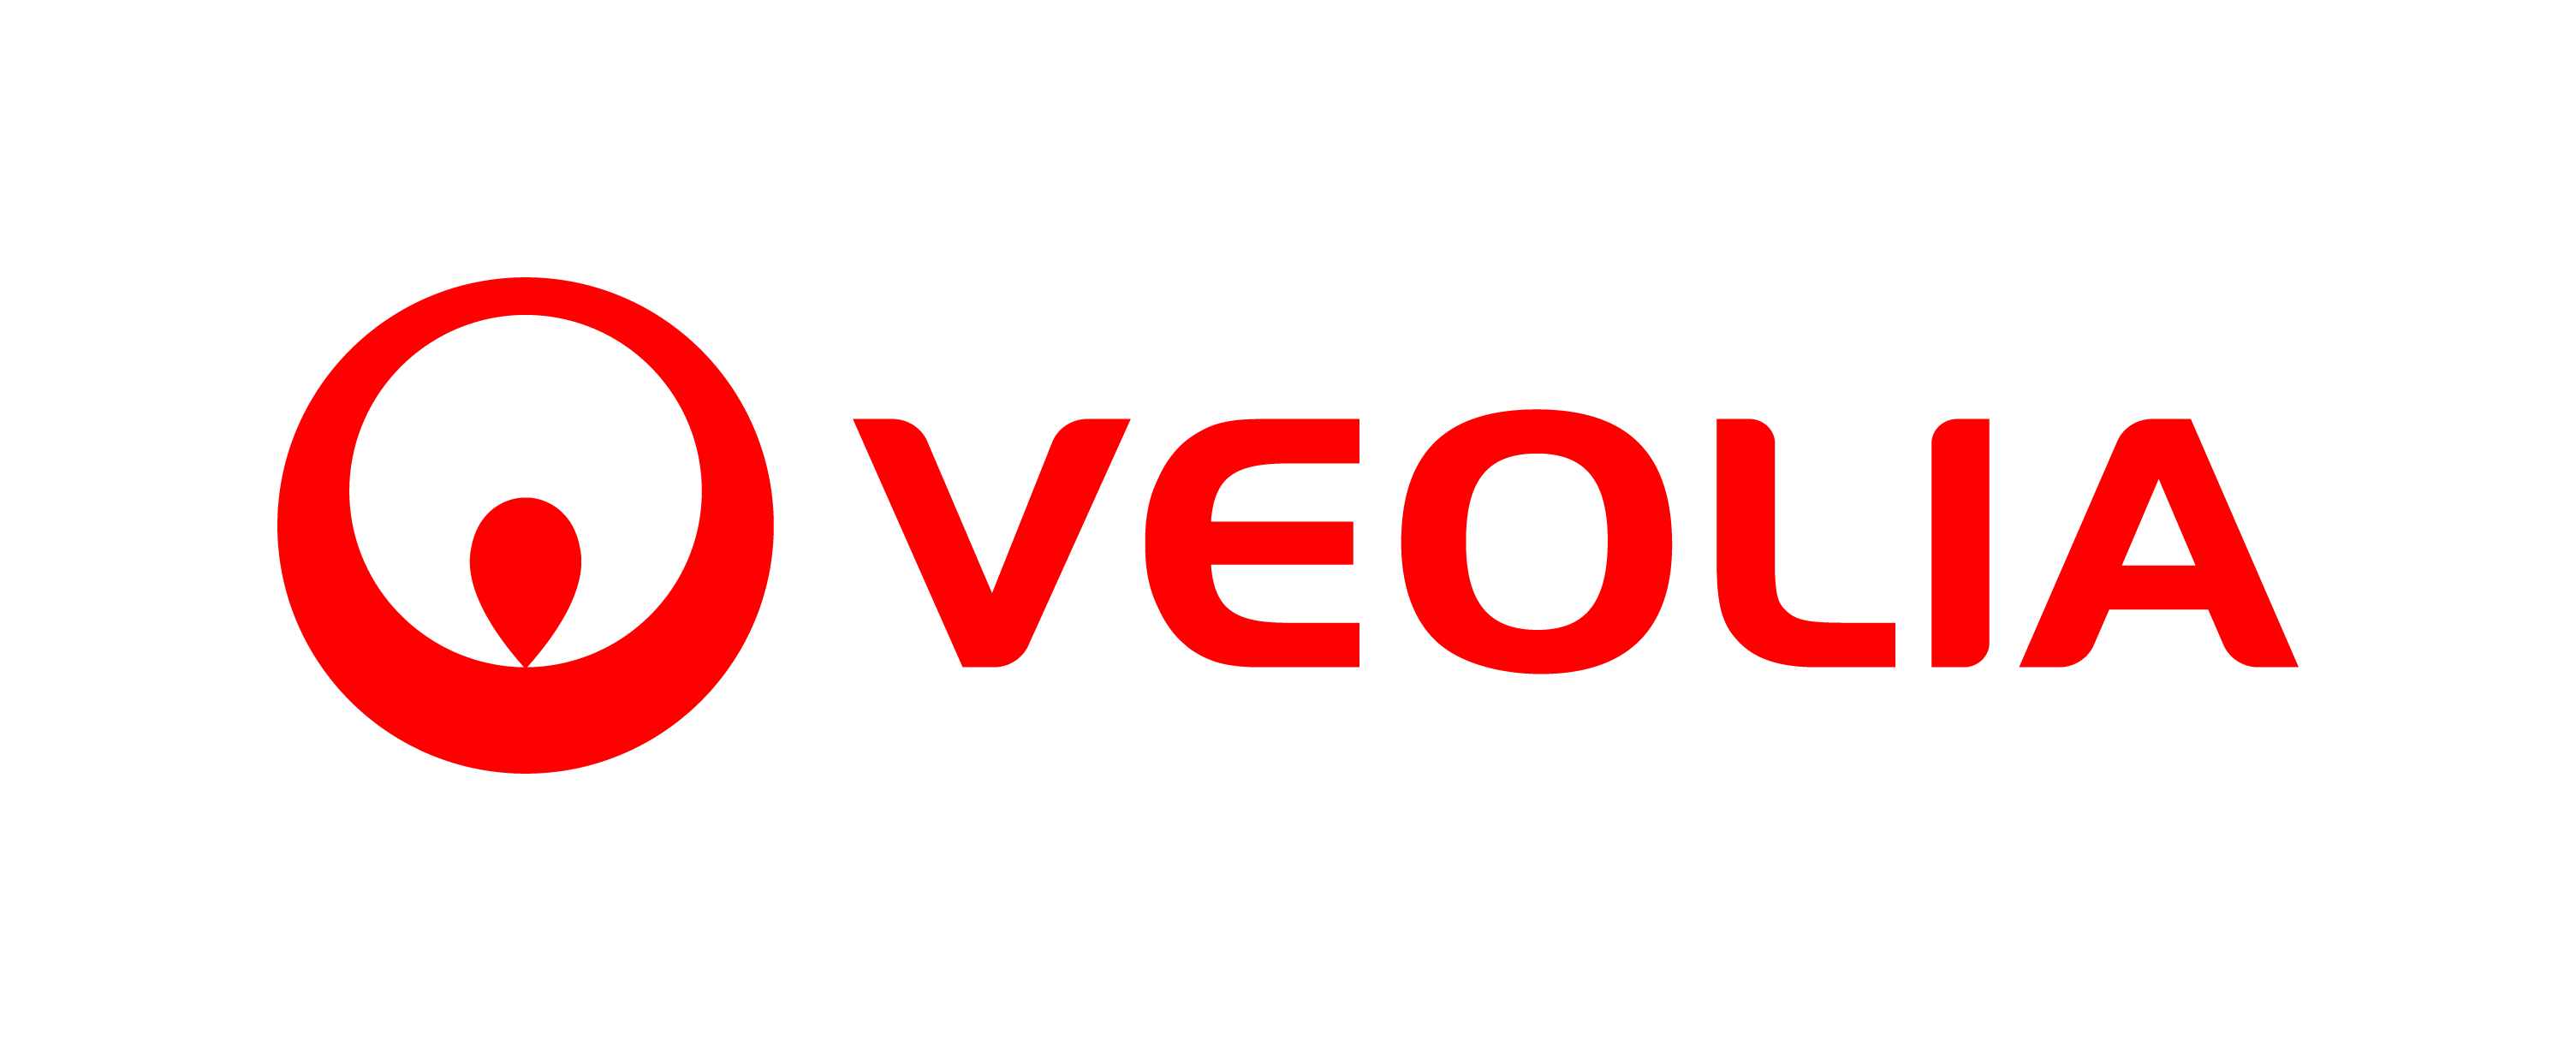 logo véolia